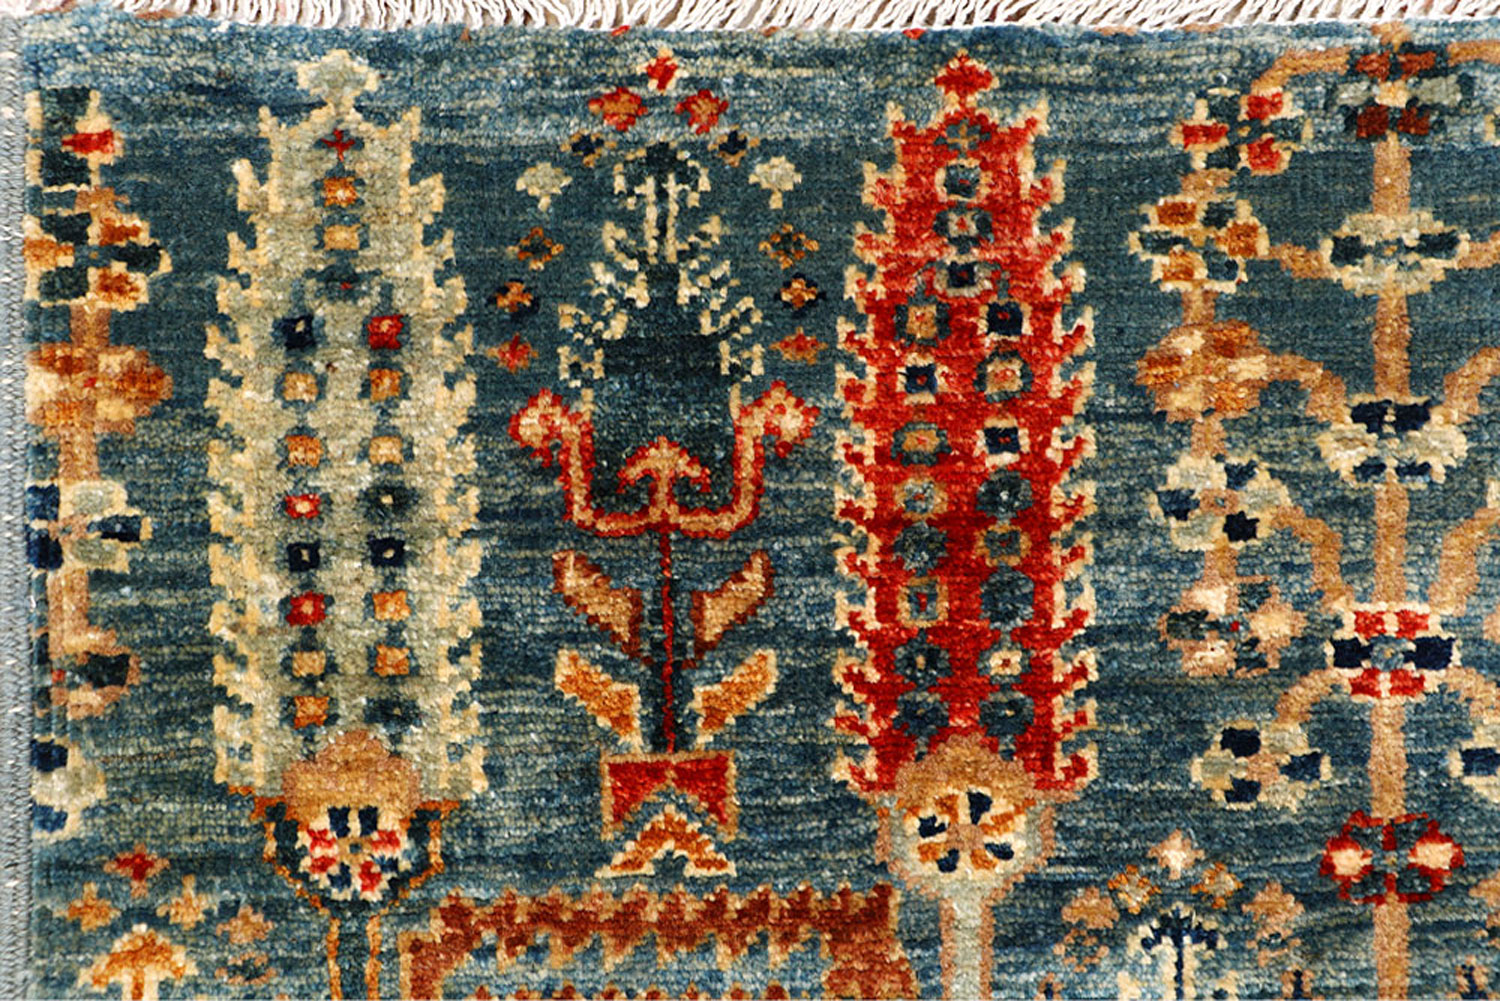 Georgian Carpets